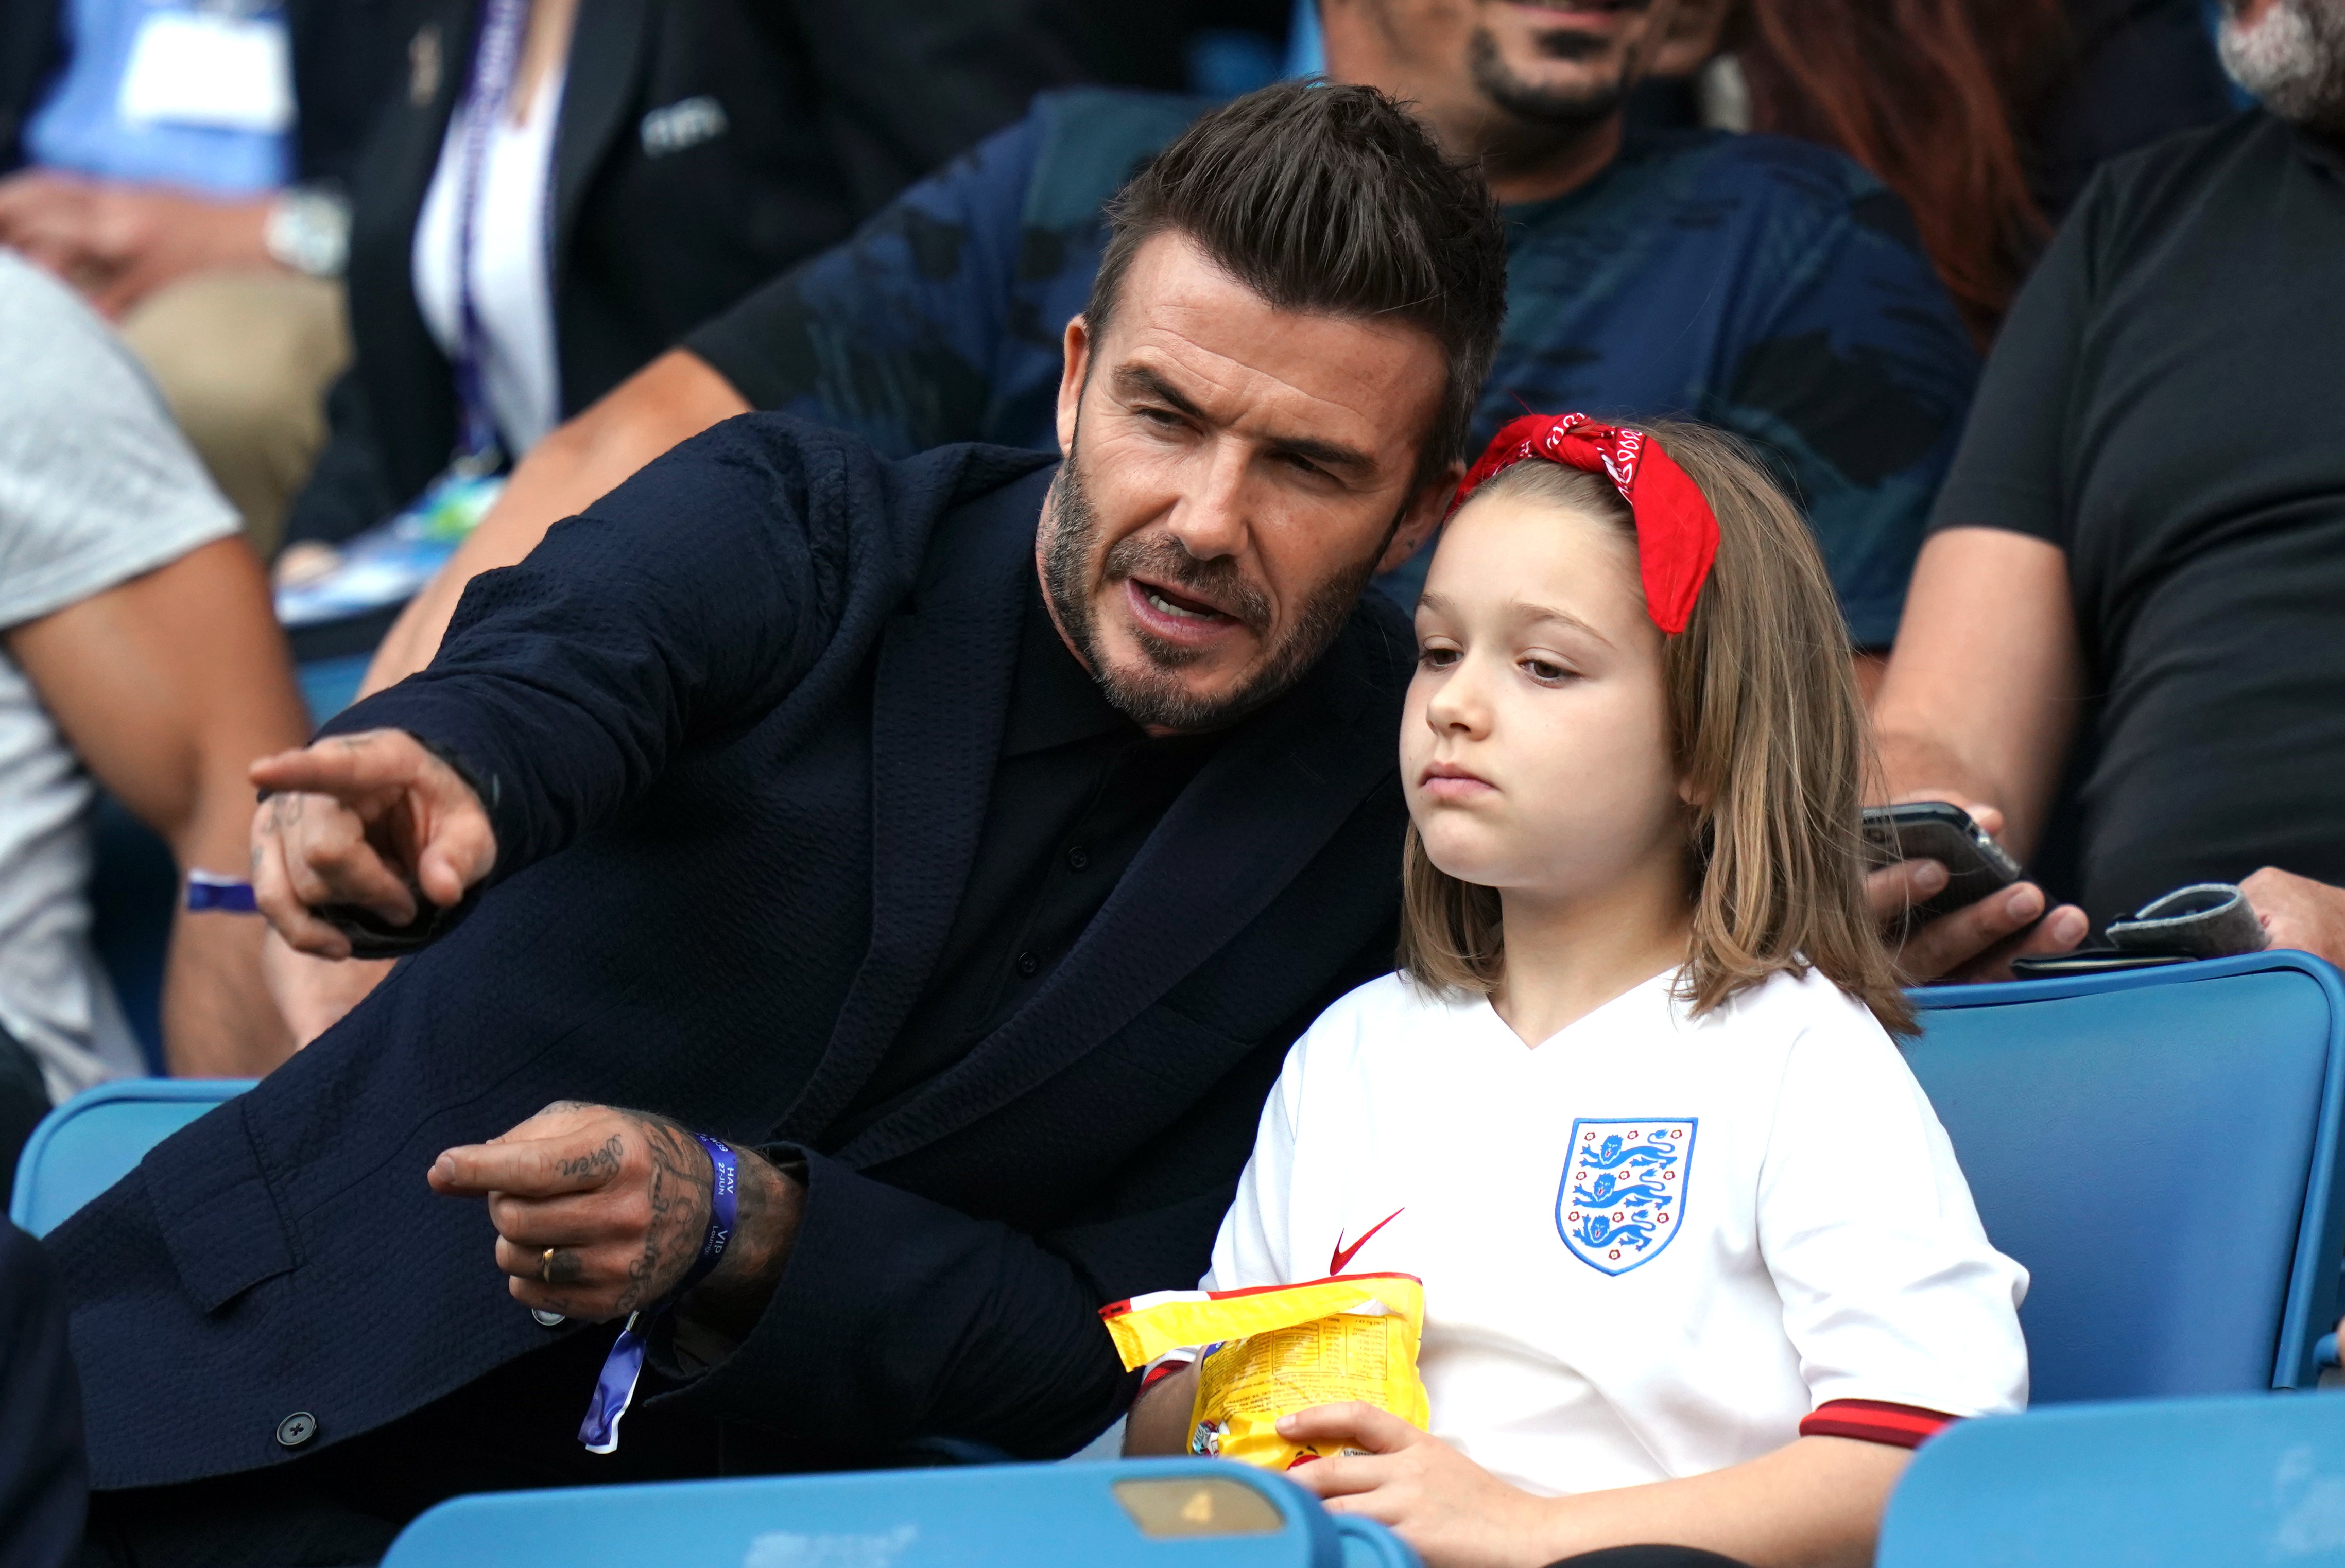 David Beckham alongside his daughter Harper